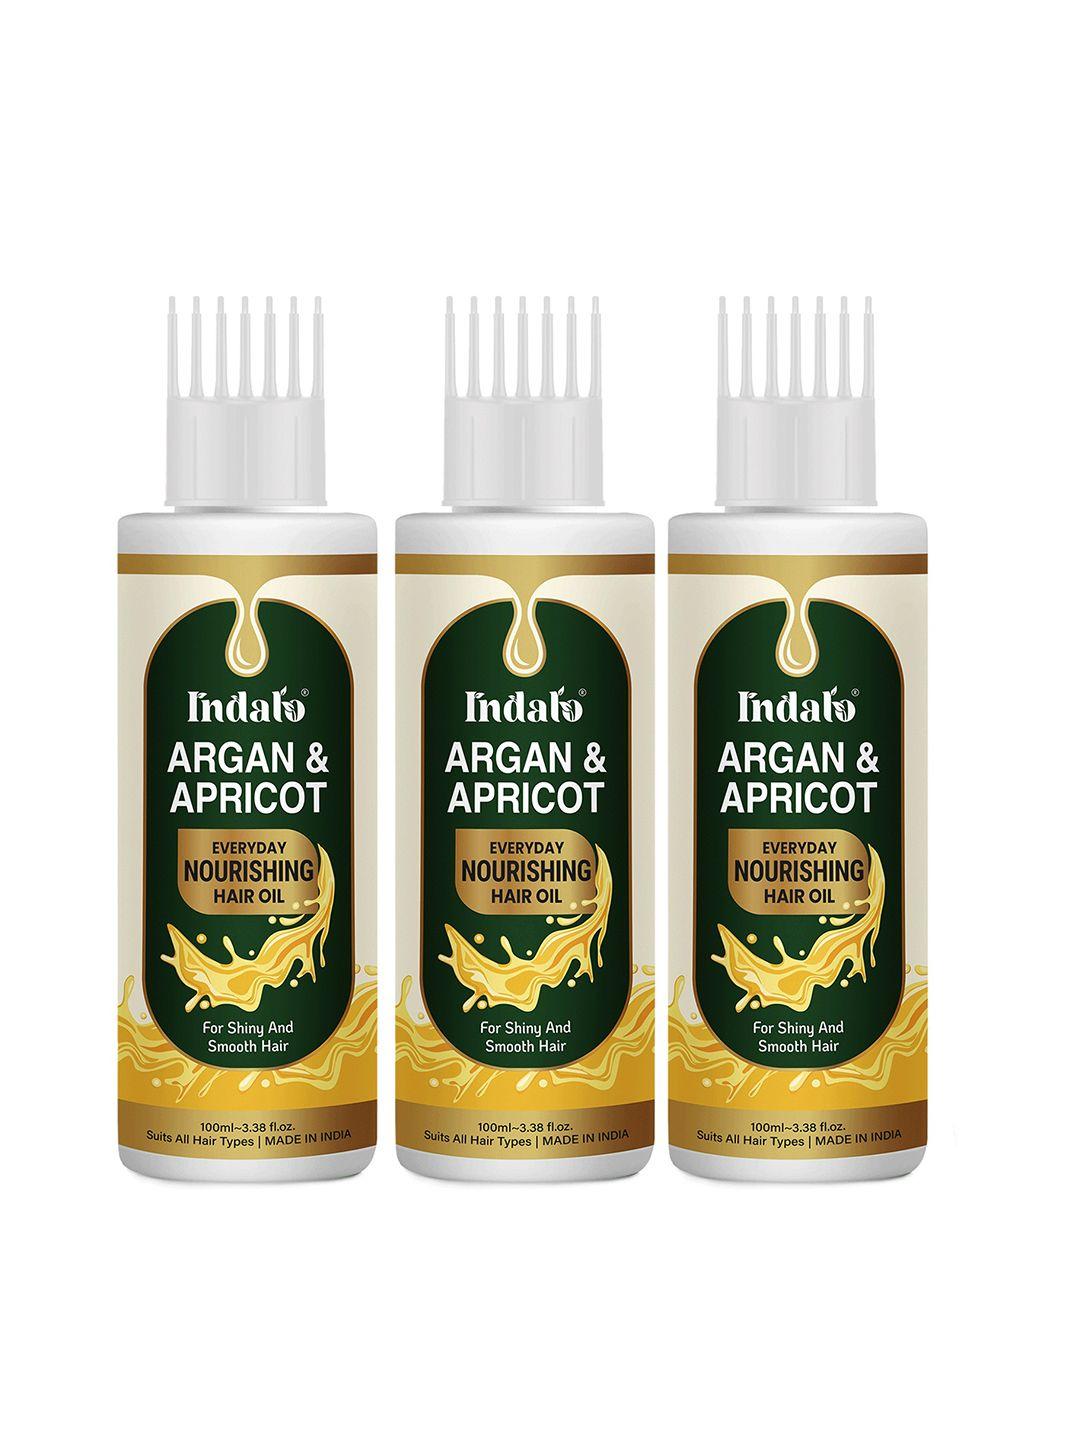 indalo set of 3 argan & apricot everyday nourishing hair oil - 100ml each